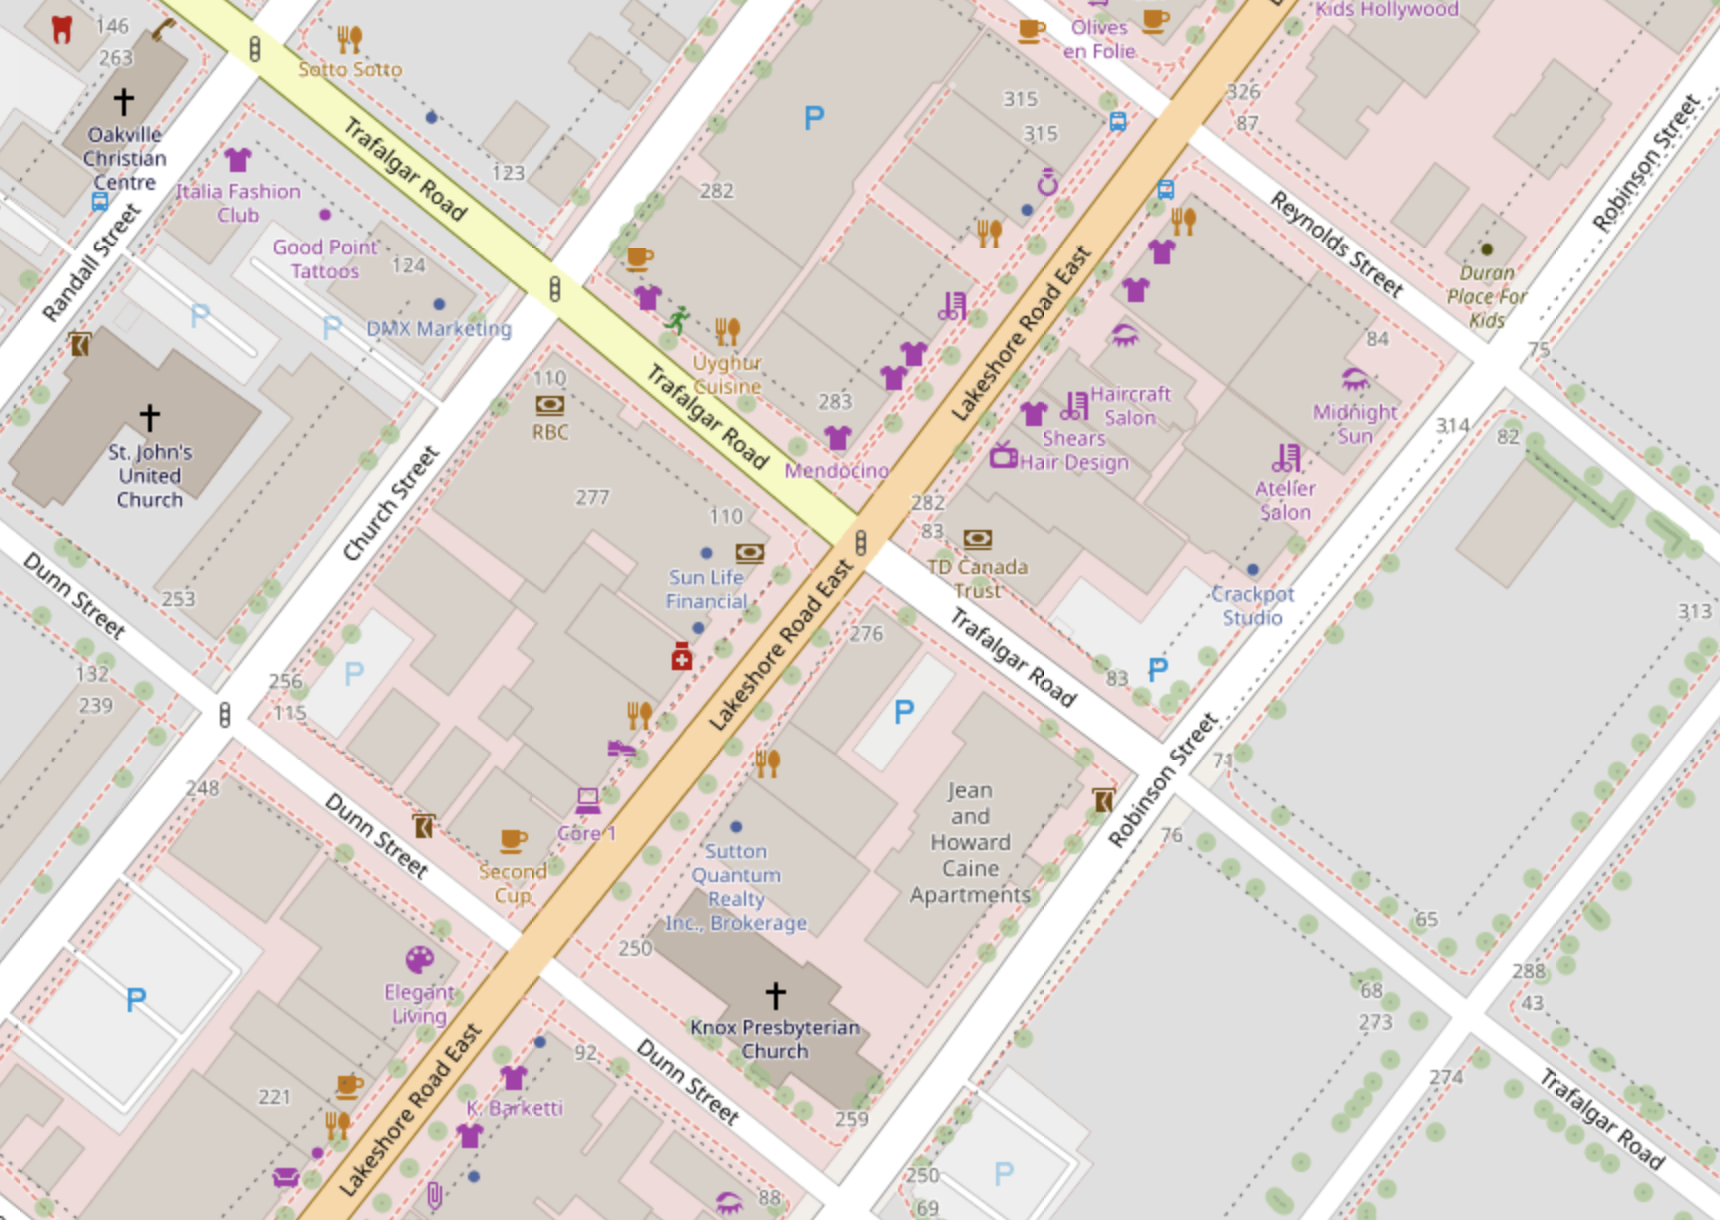 Trafalgar Road and Lakeshore Road East | Openstreetmap